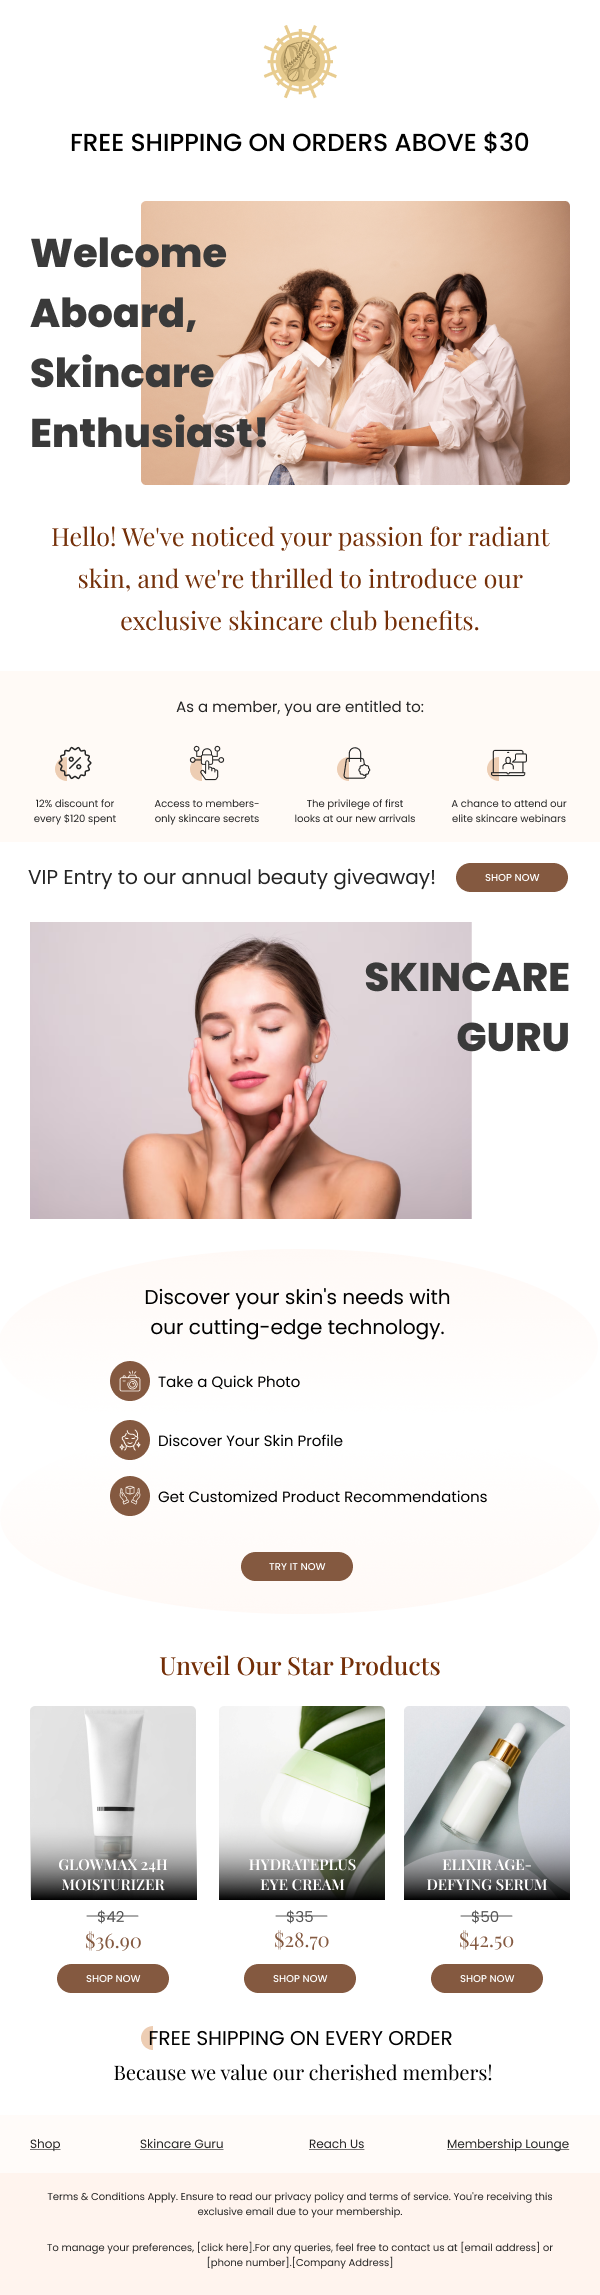 Beauty-Welcome Skincare Enthusiast